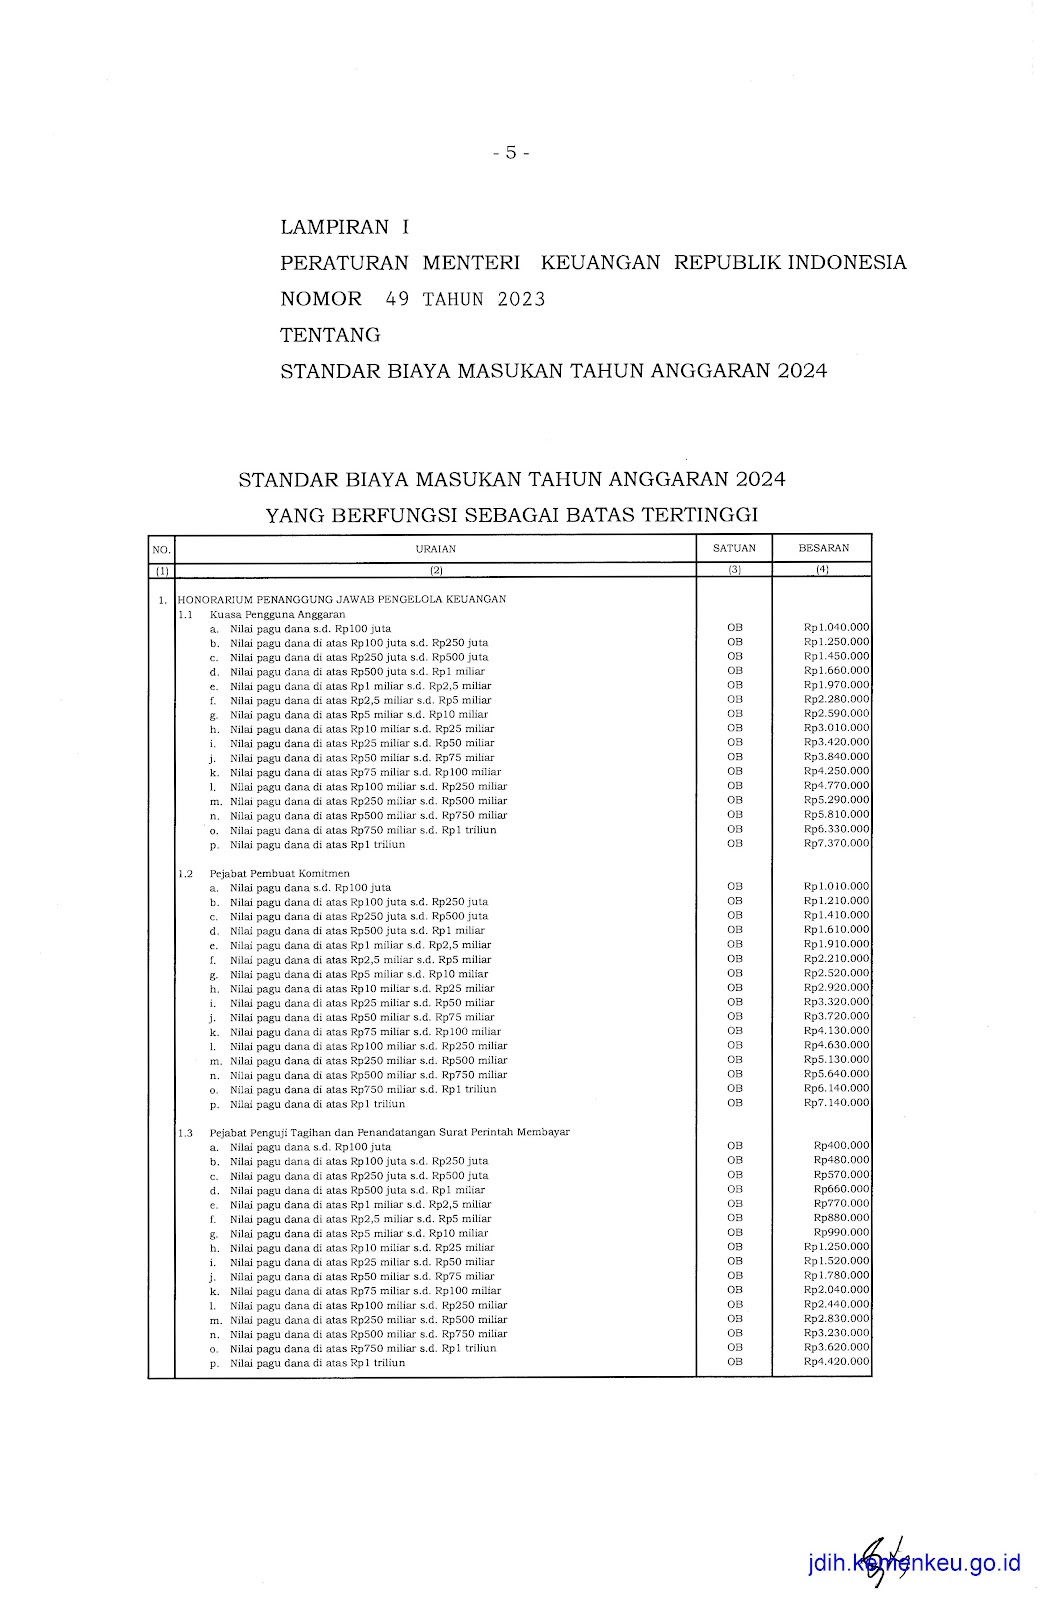 SBM 2024 Honorarium Penanggung Jawab Pengelola Keuangan